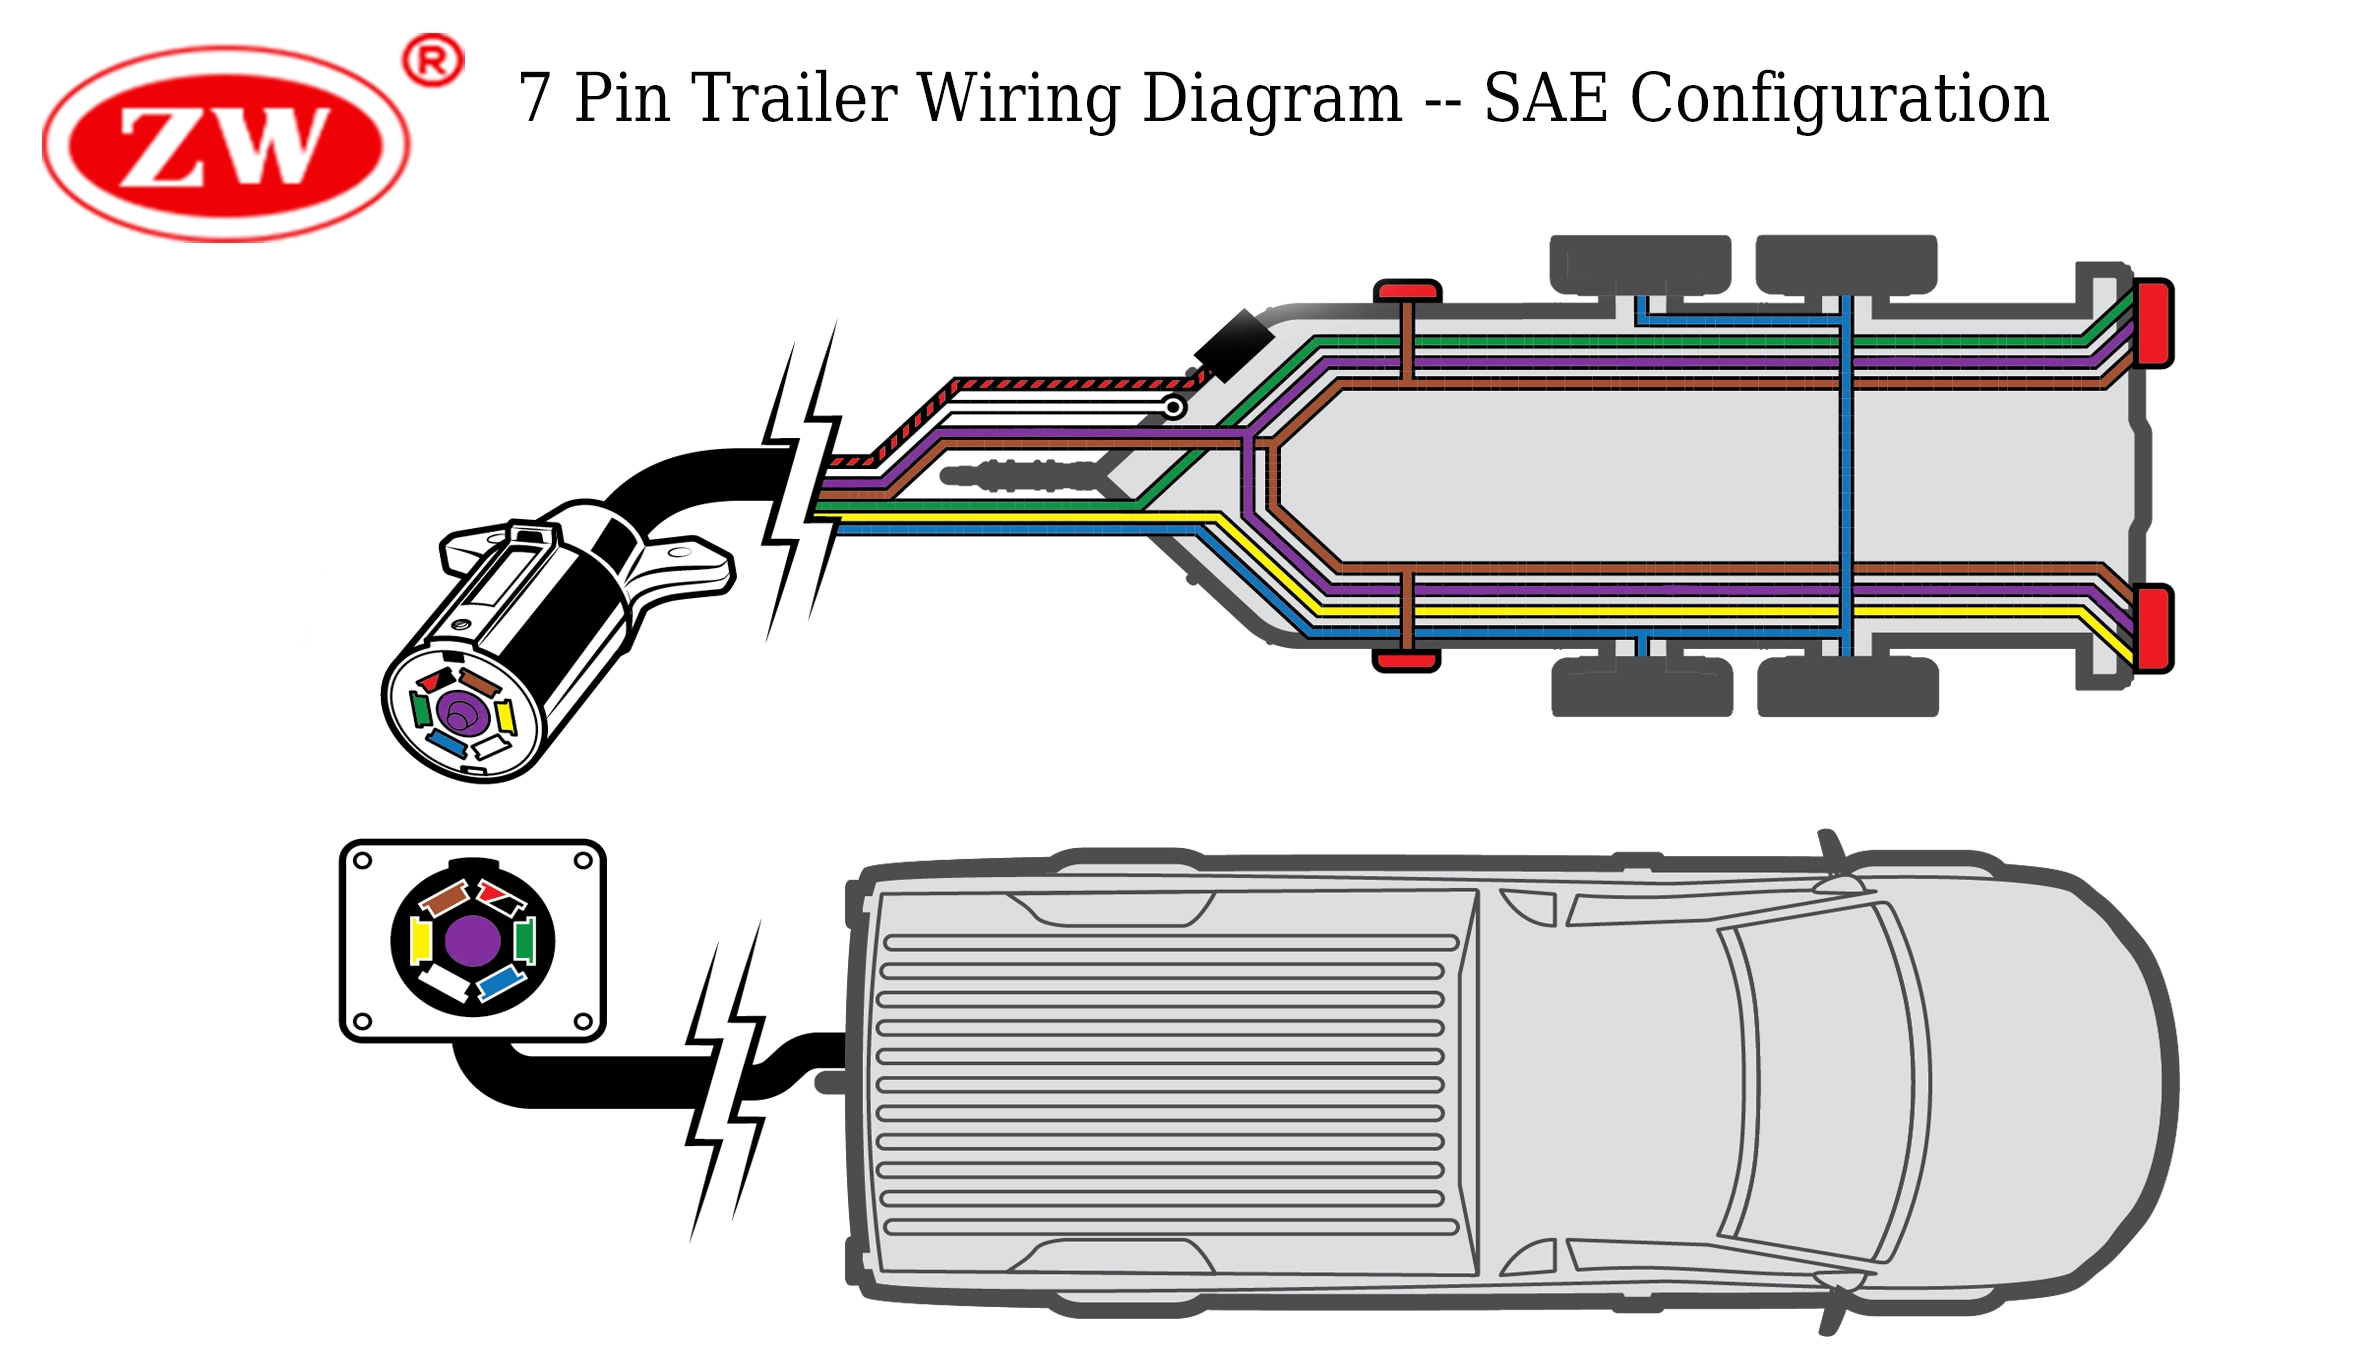 7 Pin Trailer Wiring Diagram - SAE Configuration